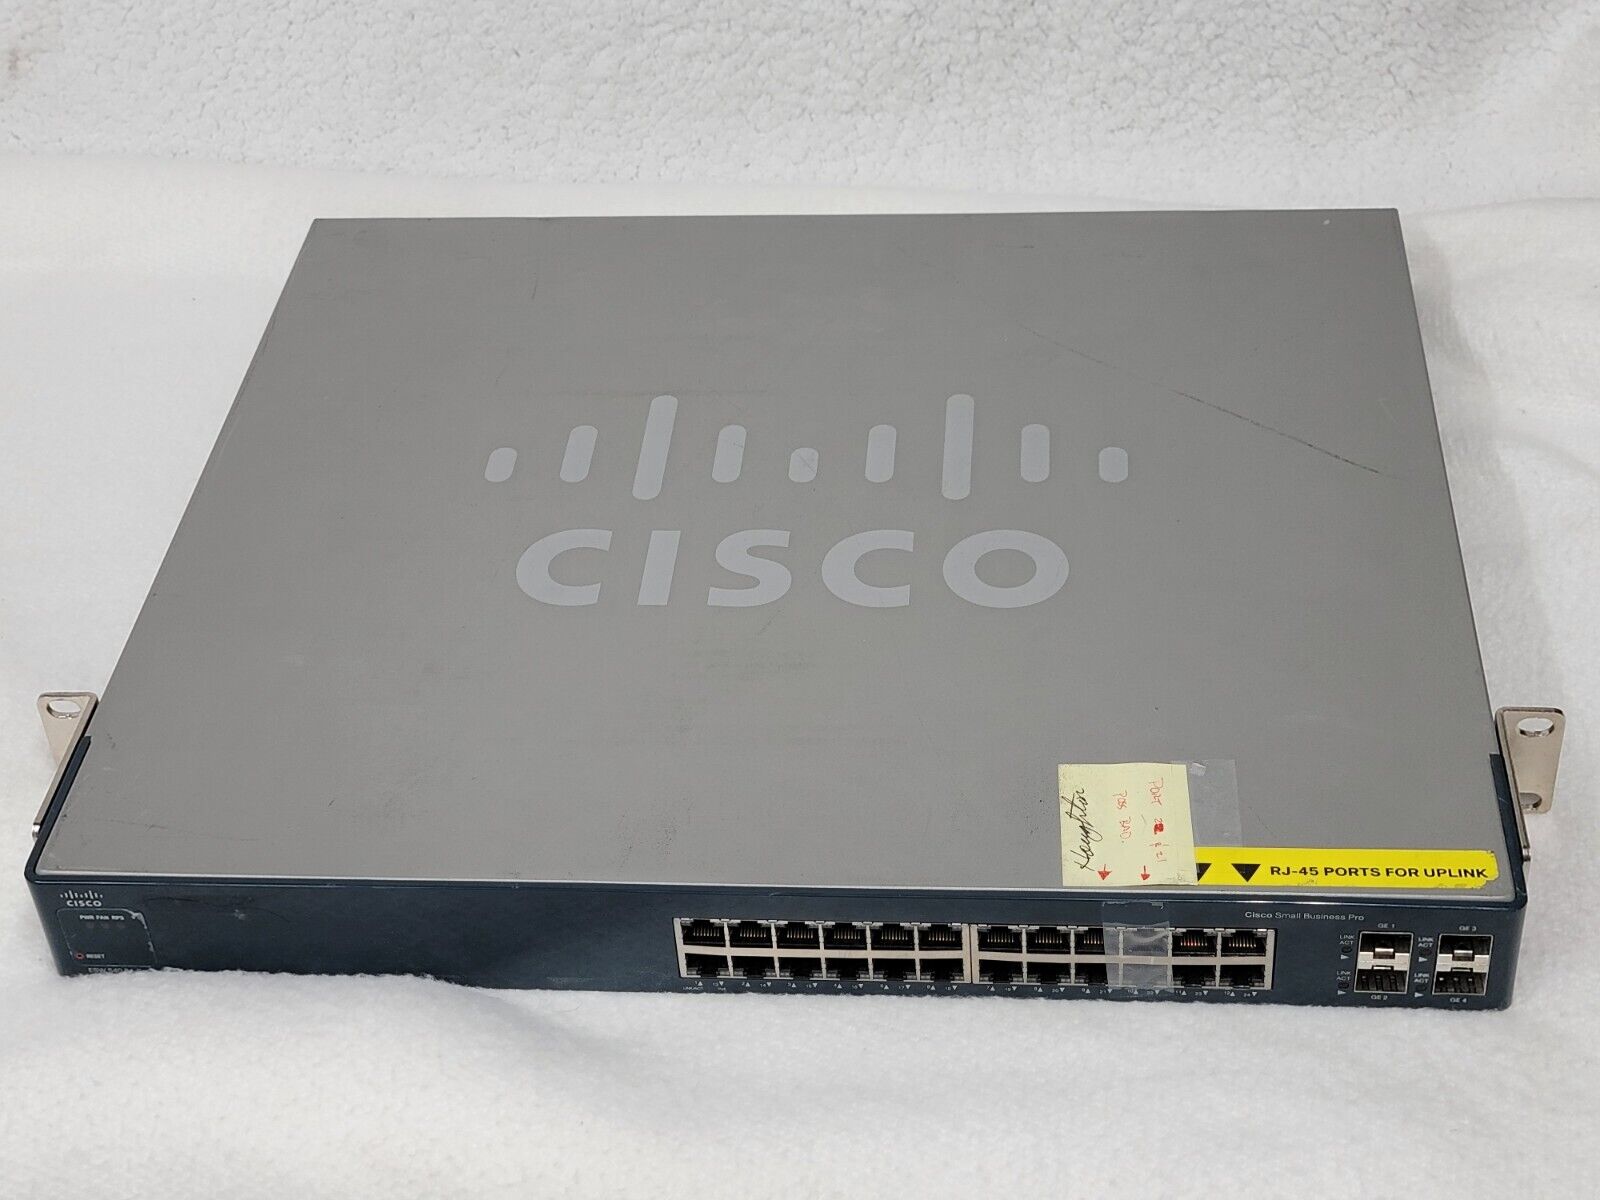 Cisco ESW-540-24P-K9 Small Business Pro 24-port 10/100/1000 Giga Ethernet Switch